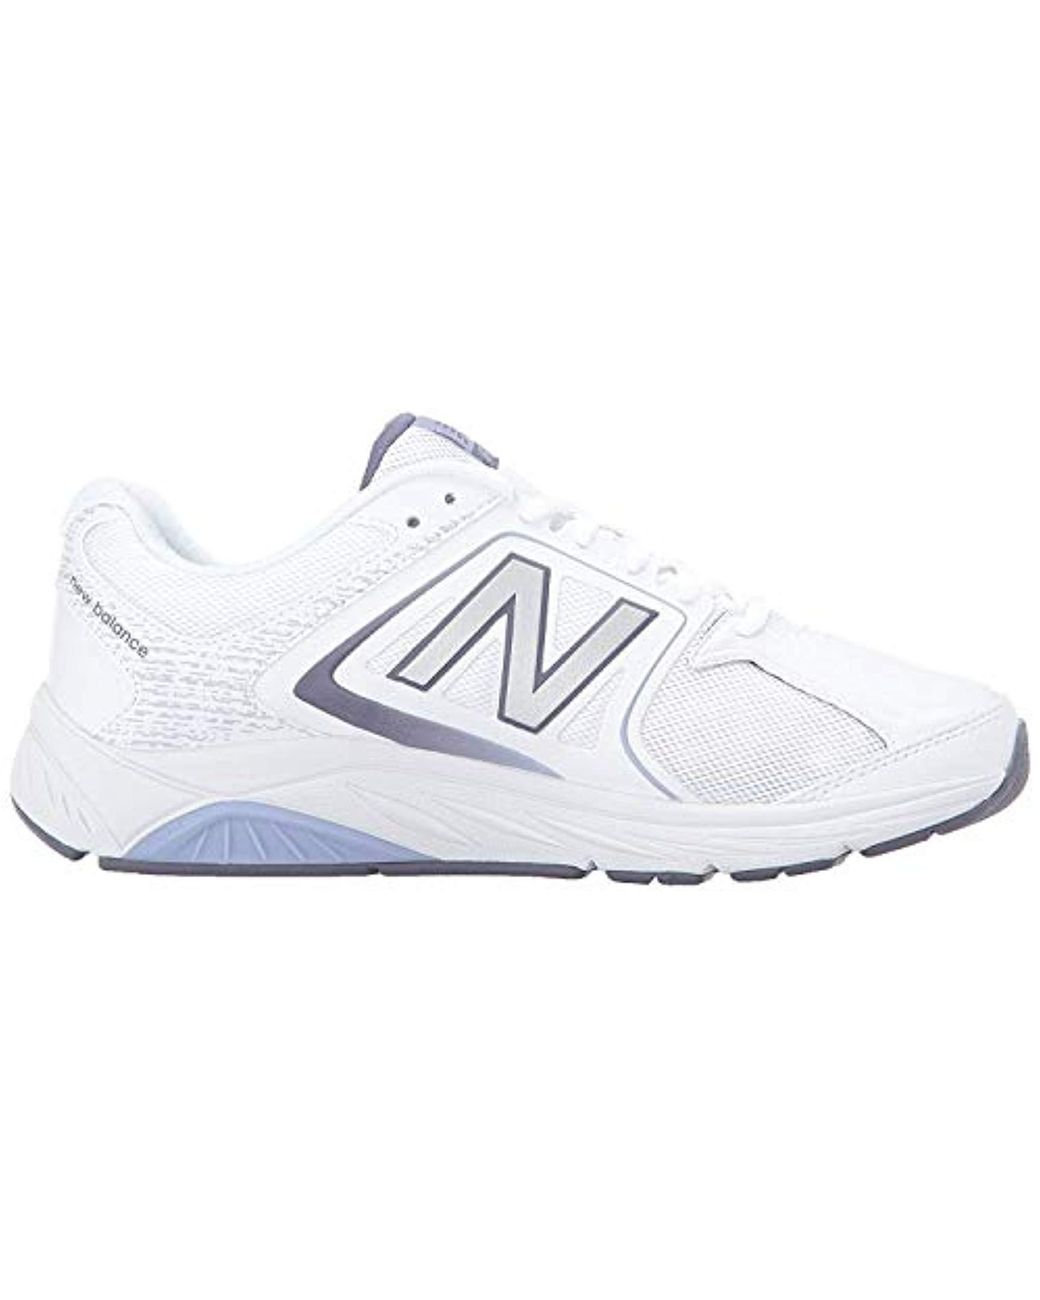 New Balance 847v3 Walking Shoe in White | Lyst